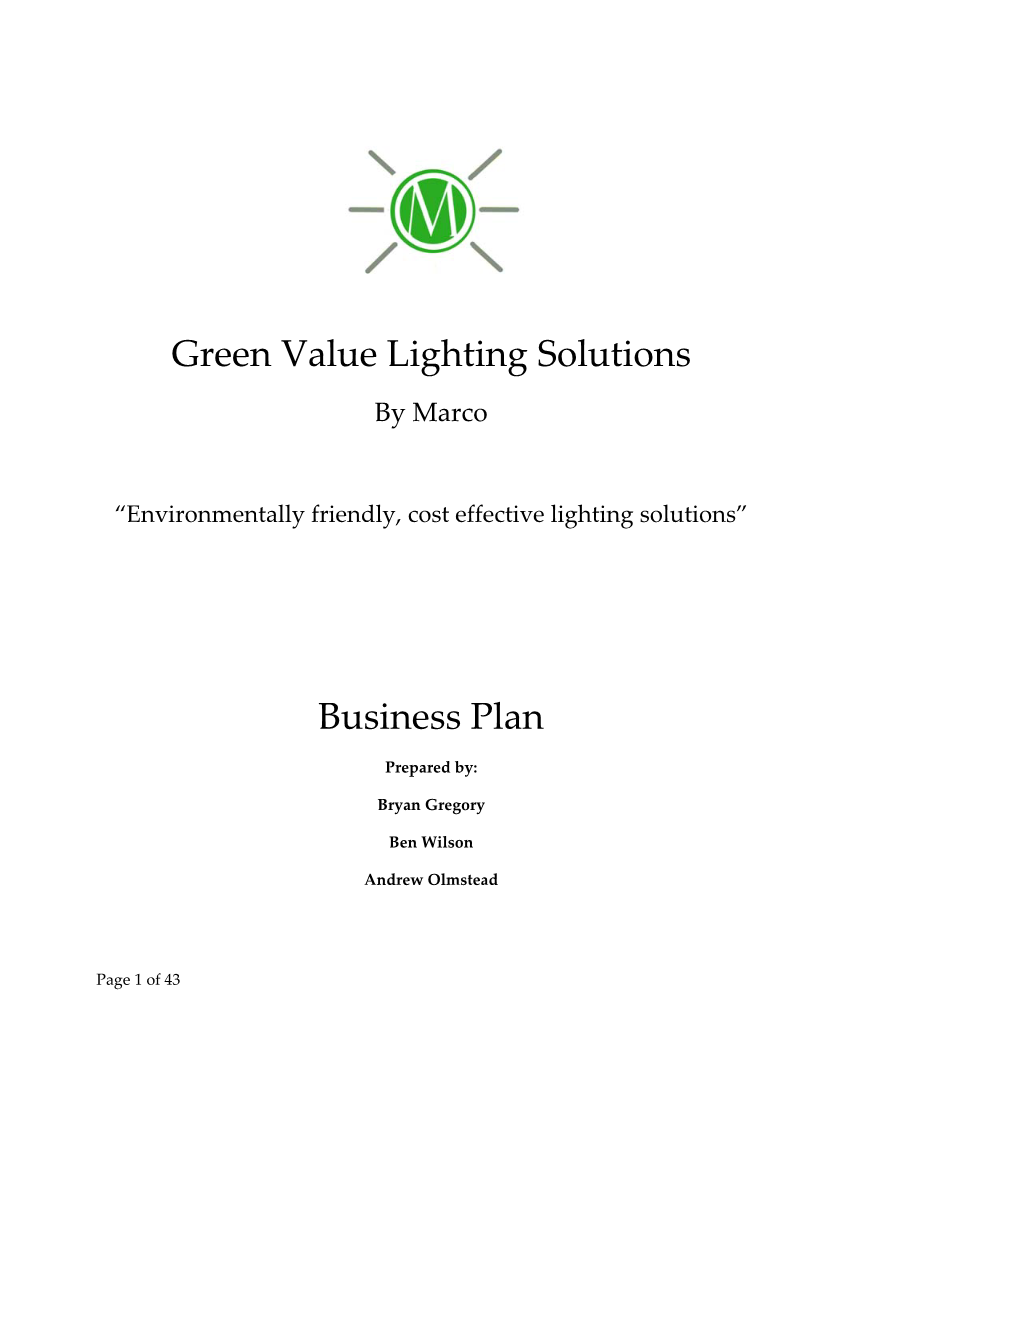 Green Value Lighting Solutions Business Plan